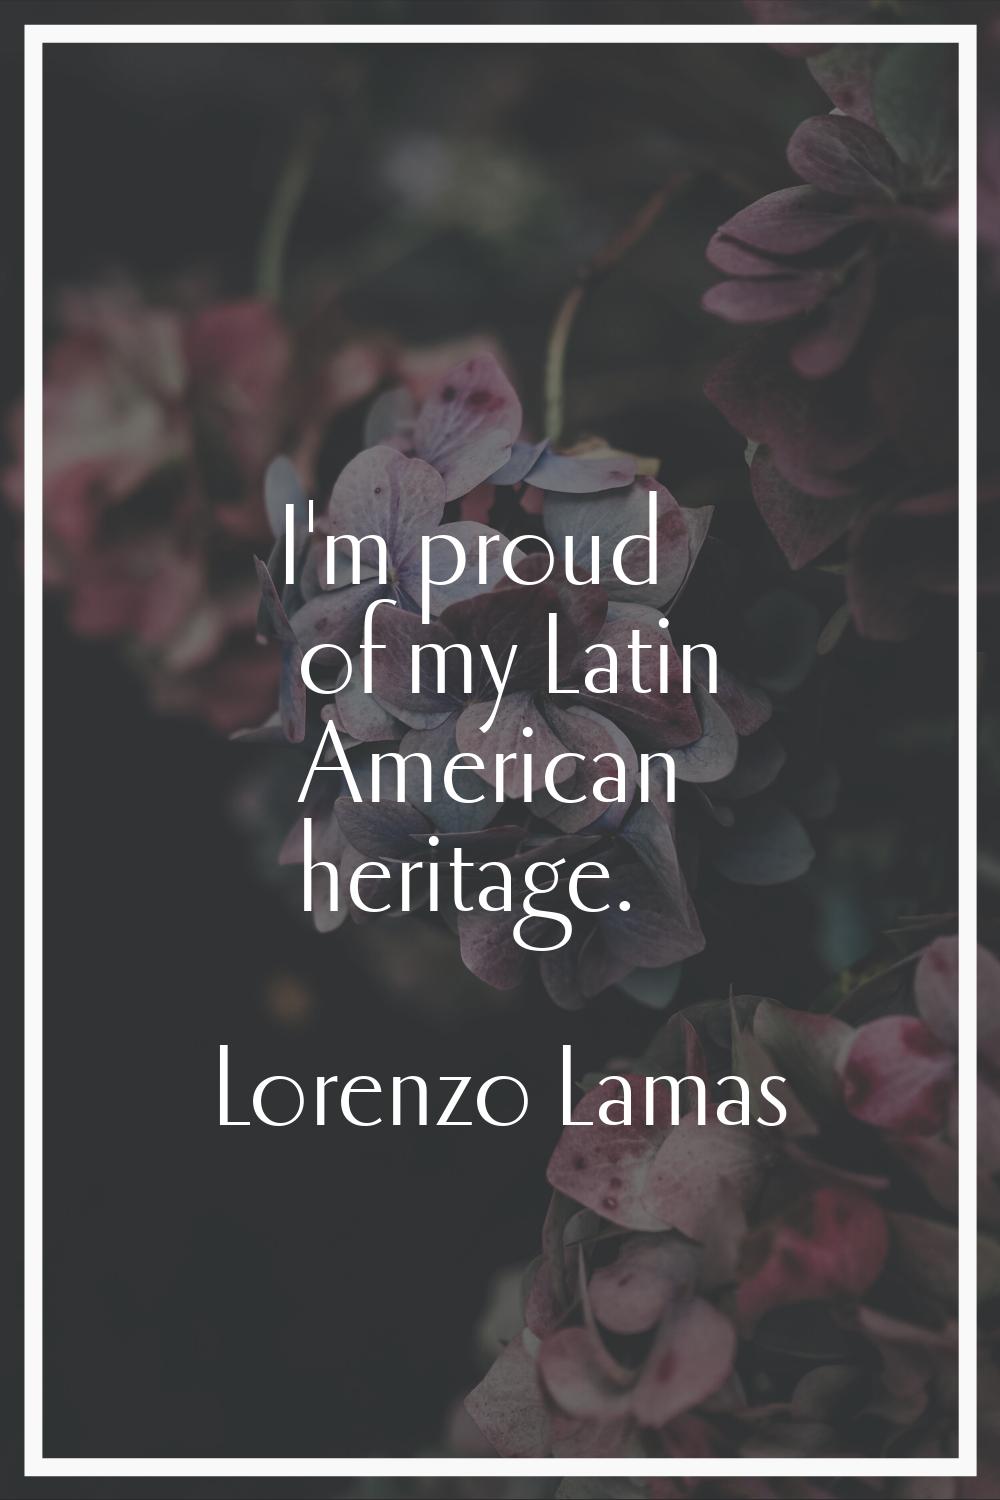 I'm proud of my Latin American heritage.